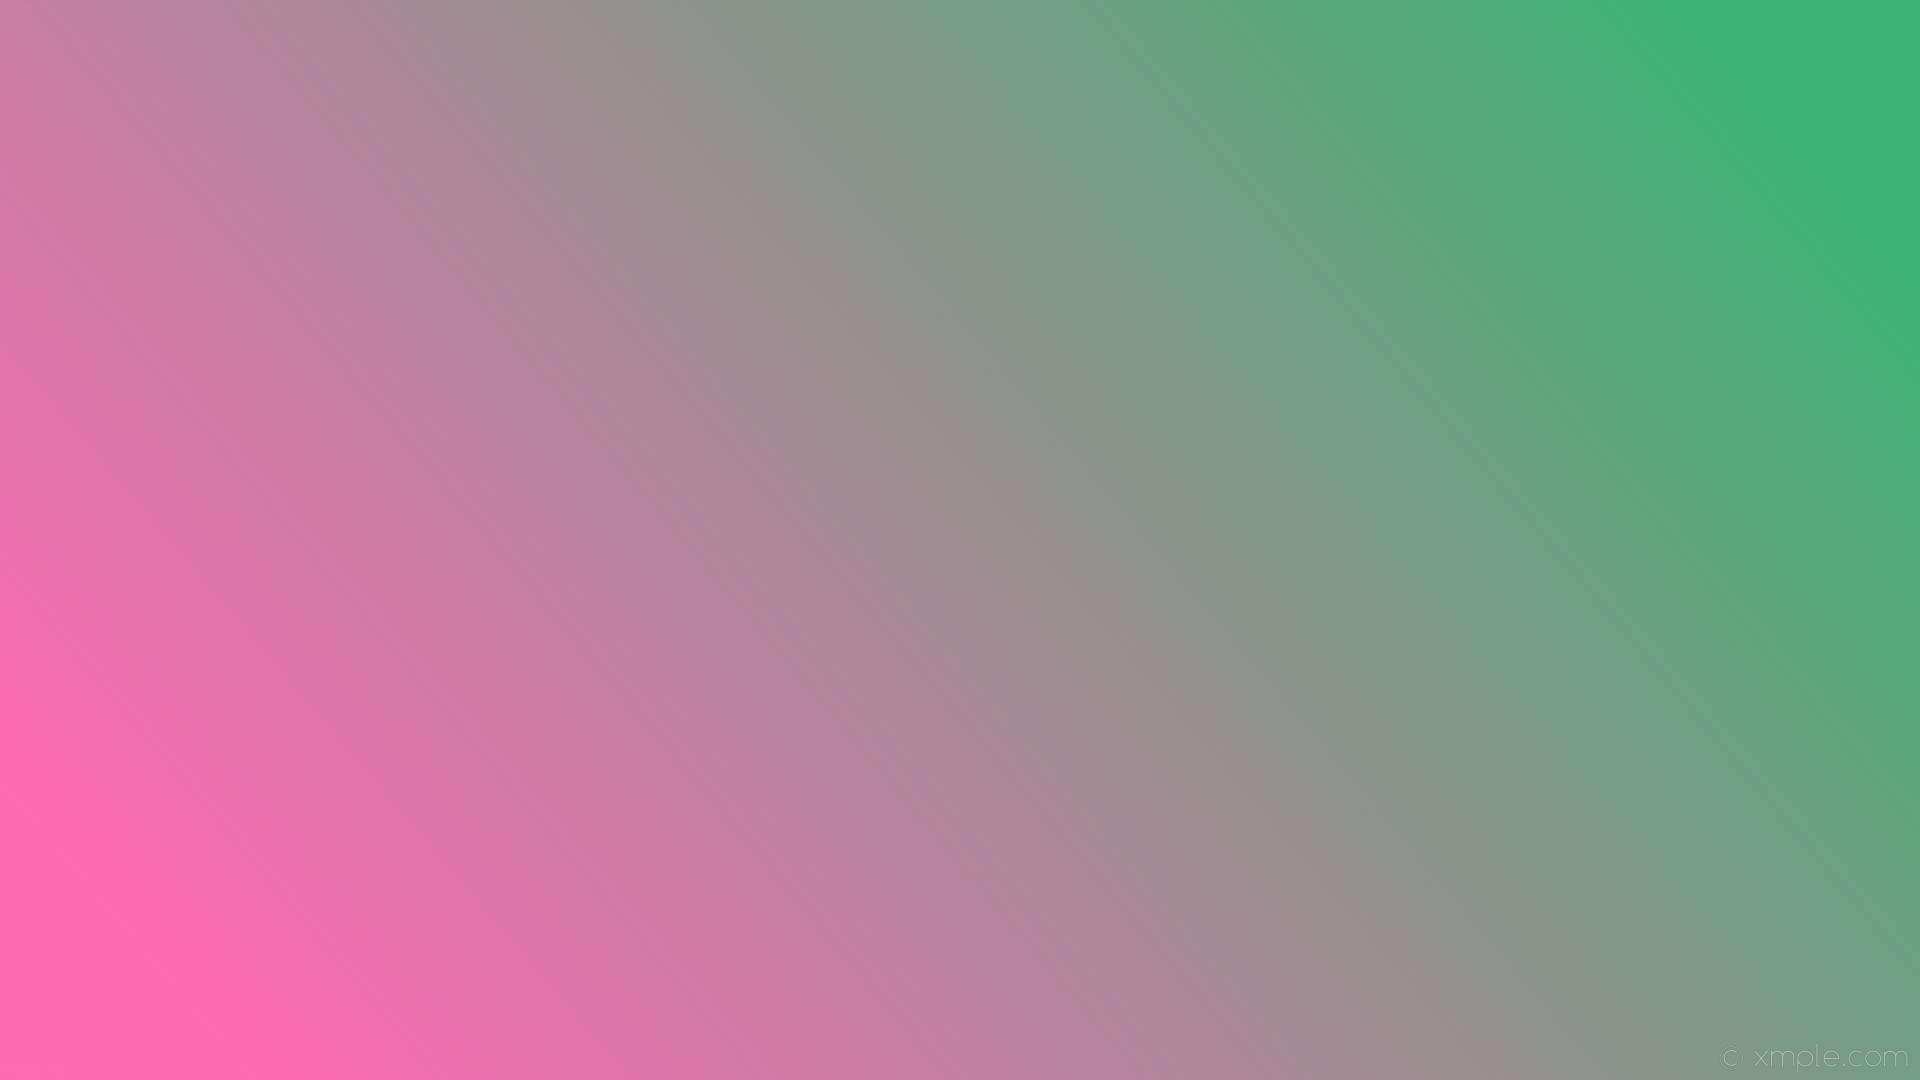 1920x1080 wallpaper green pink linear gradient medium sea green hot pink #3cb371  #ff69b4 15Â°